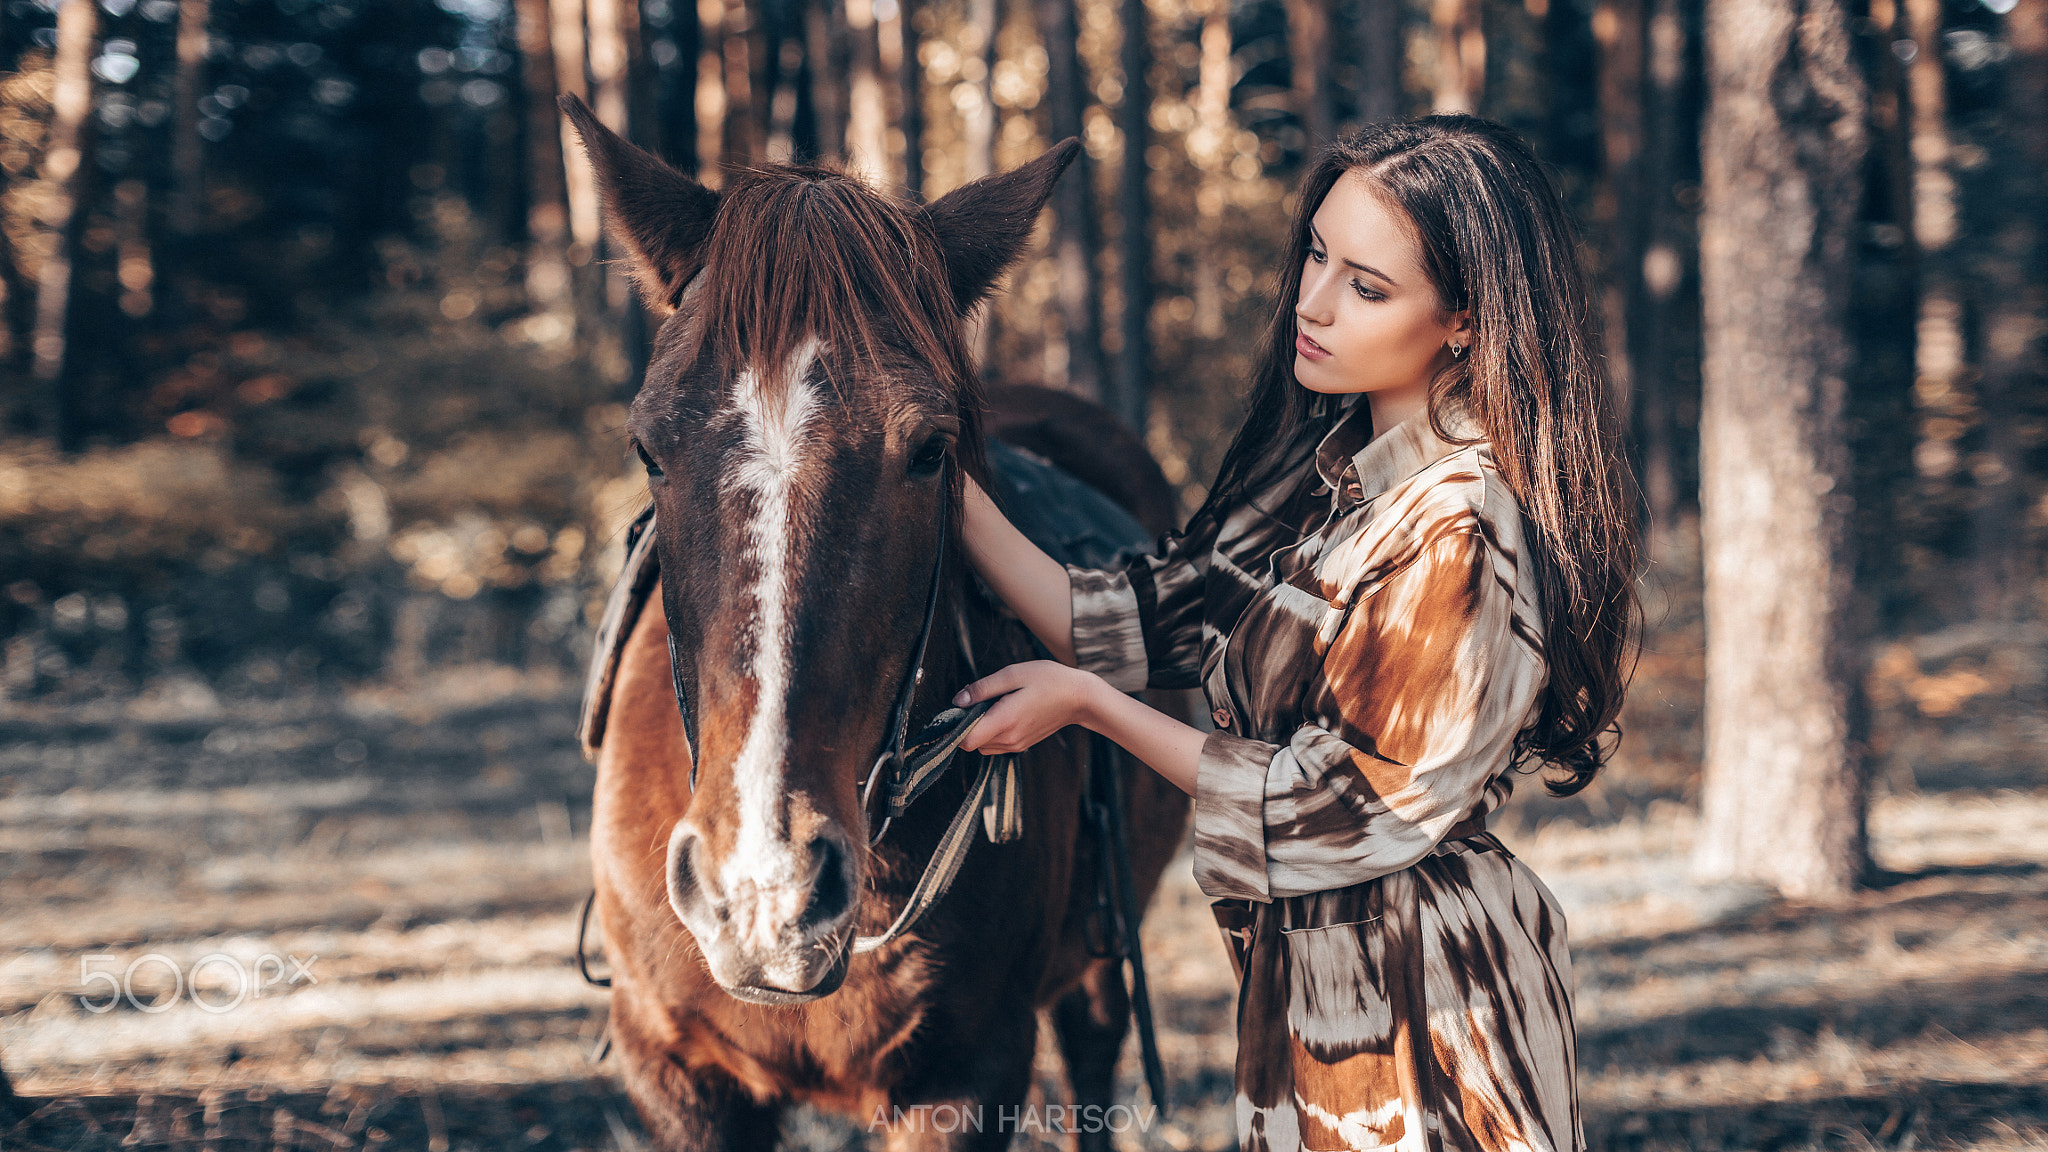 Anton Harisov Women Brunette Long Hair Makeup Eyeshadow Dress Animals Horse Forest Trees Nature 2048x1152